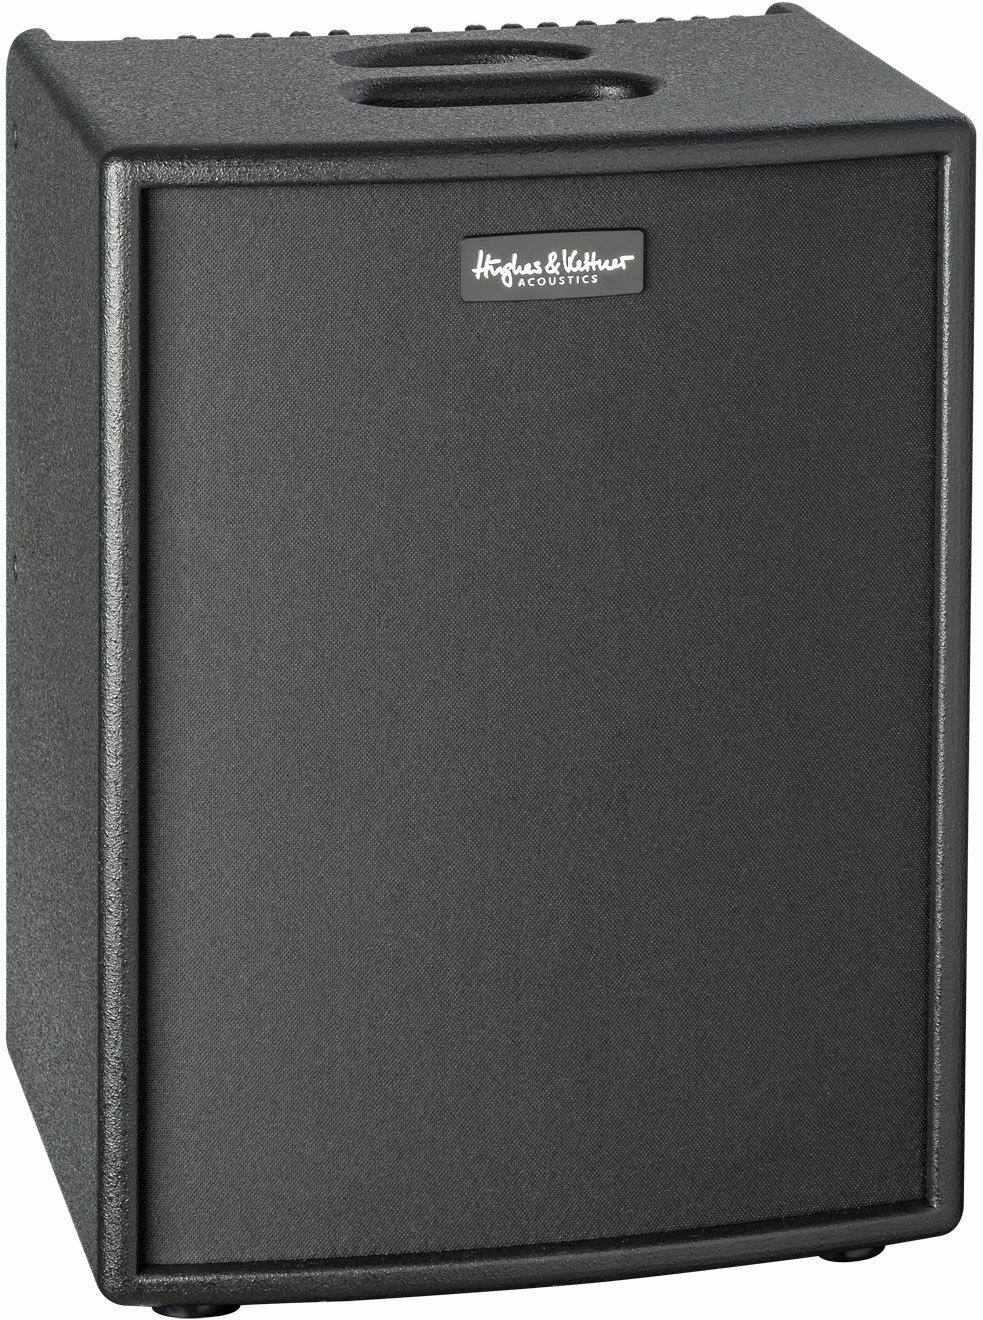 Hughes & Kettner Era 2 400w 2x8 Black - Combo amplificador acústico - Main picture